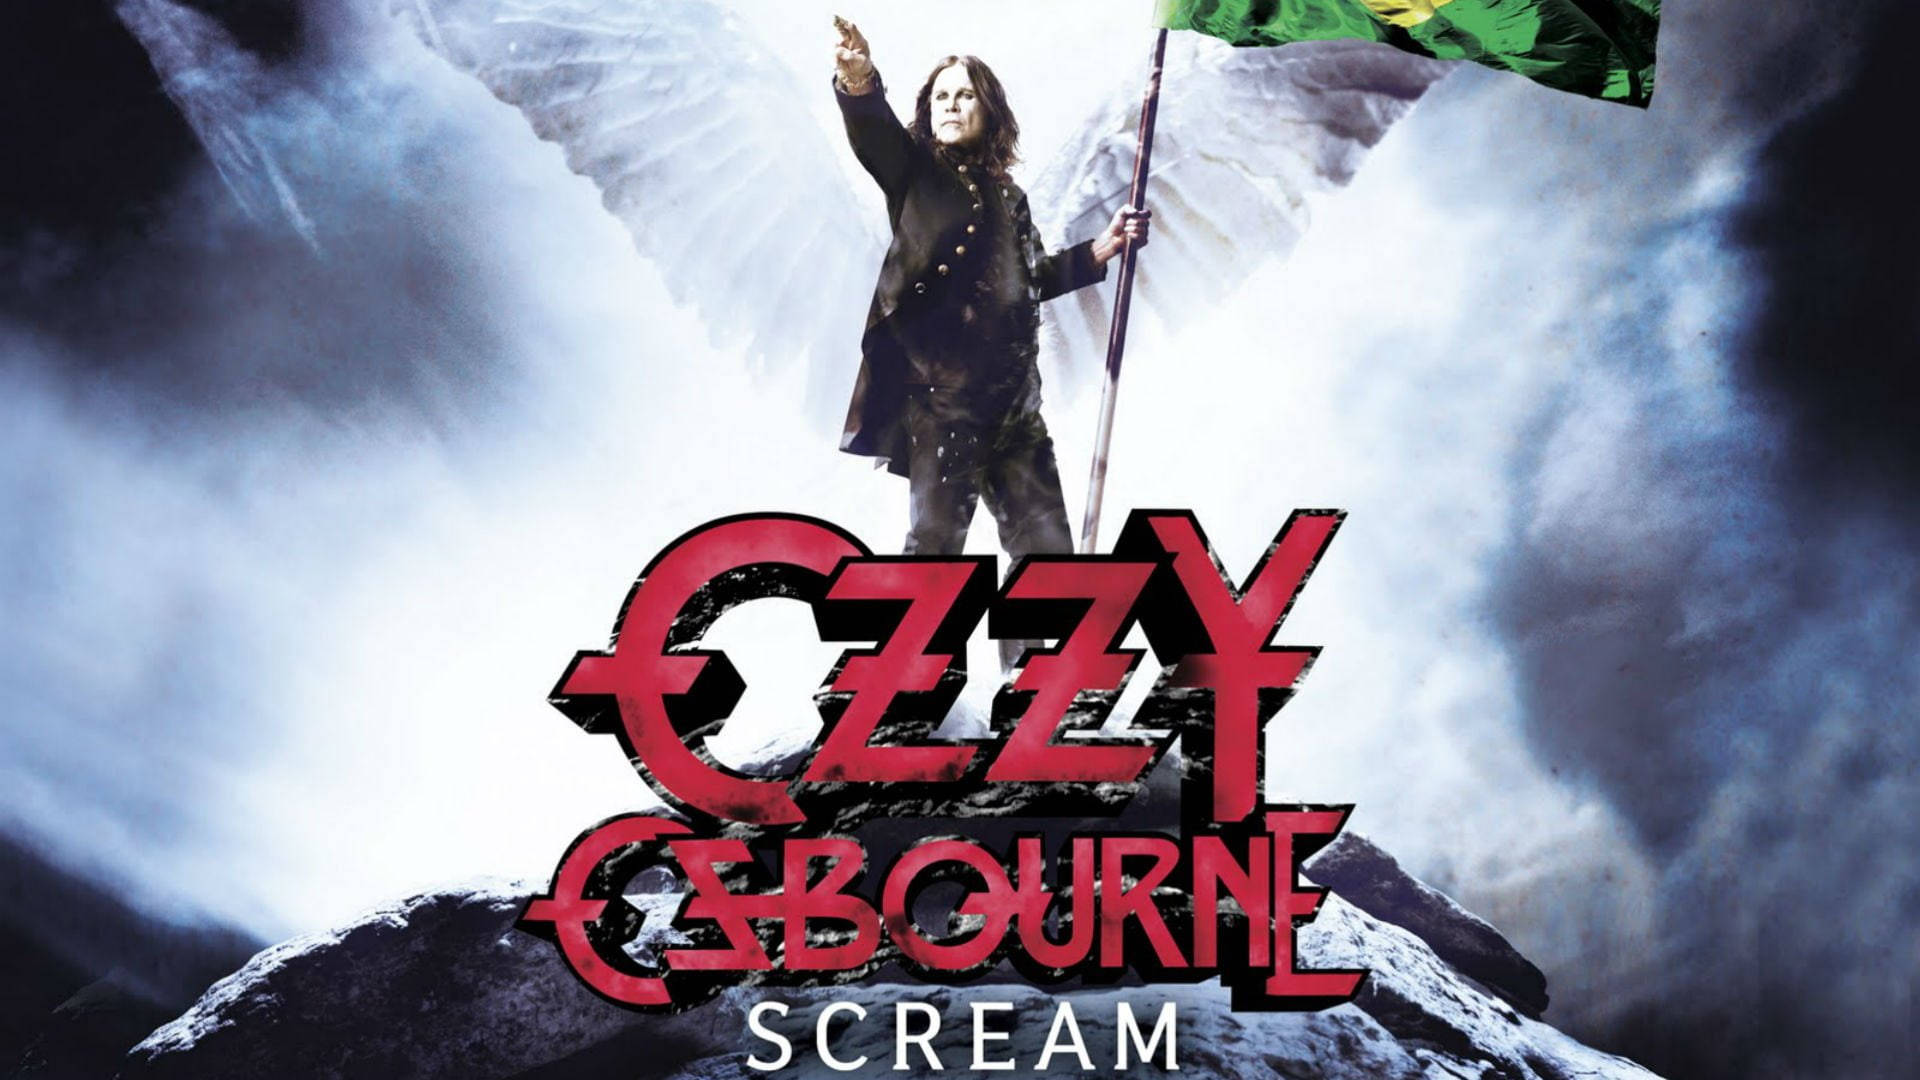 Ozzy Osbourne Scream Picture